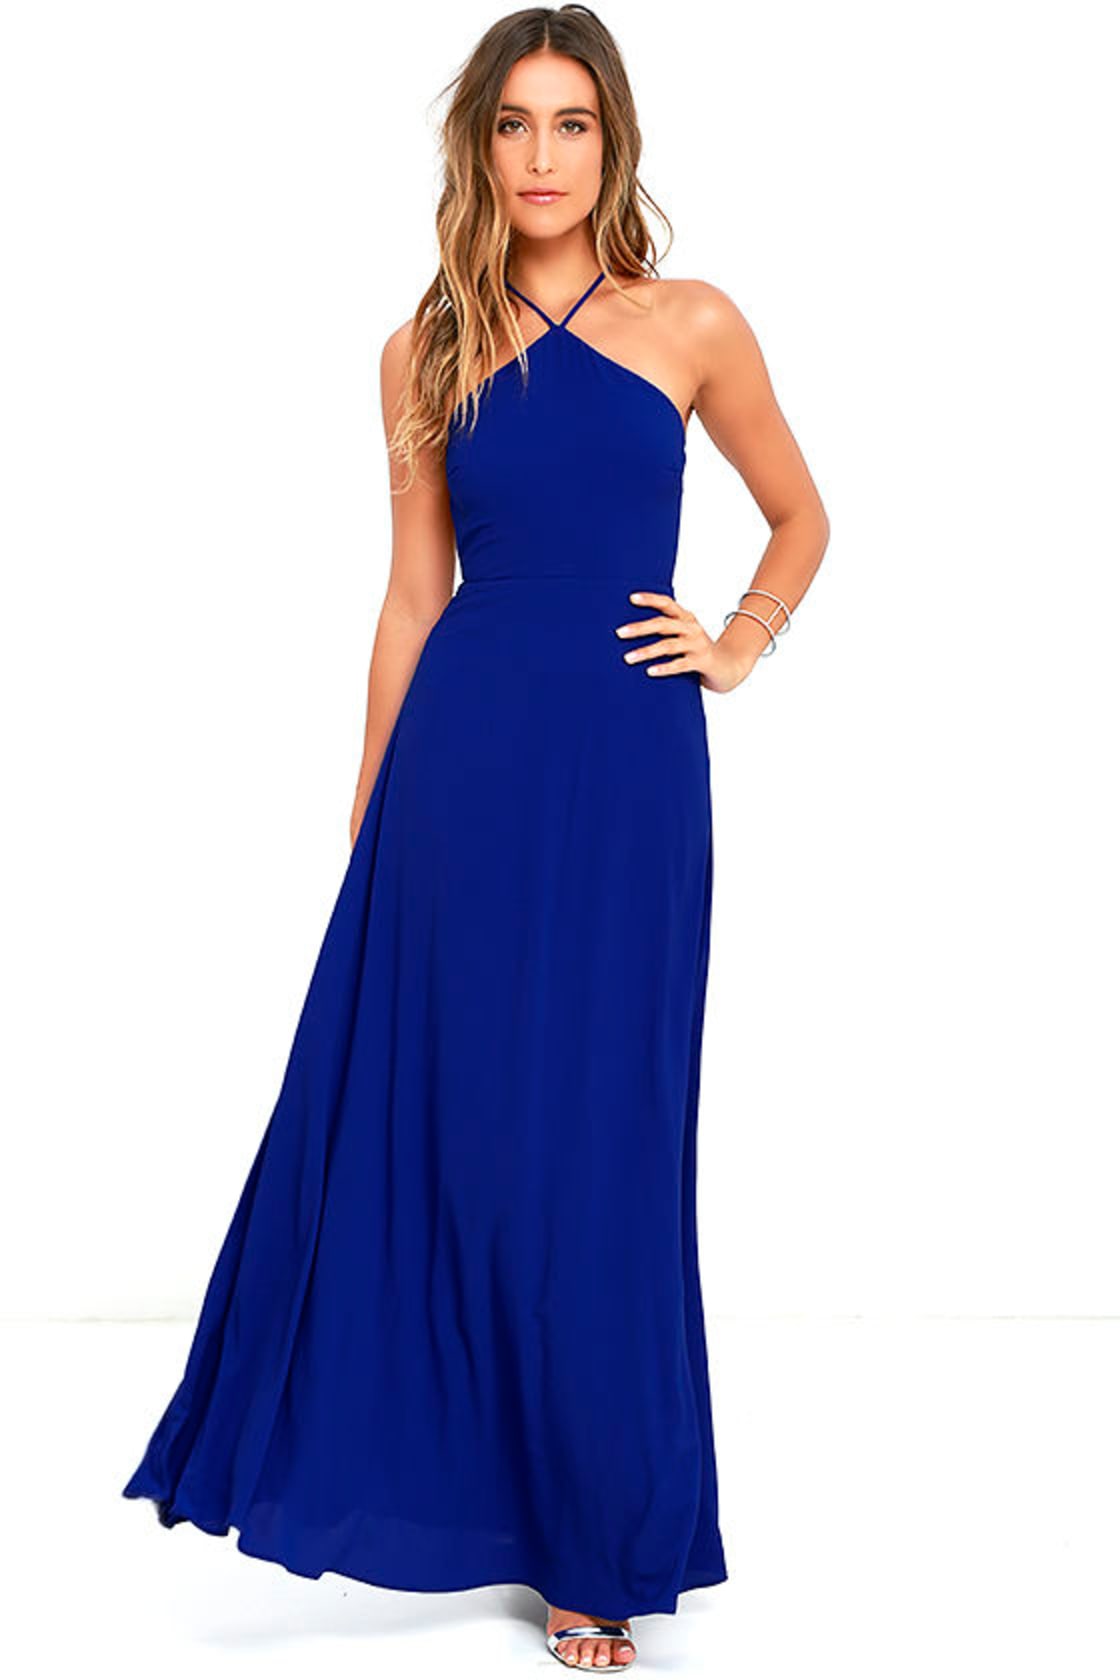 Maxi Dress - Royal Blue Dress - Backless Dress - $64.00 - Lulus